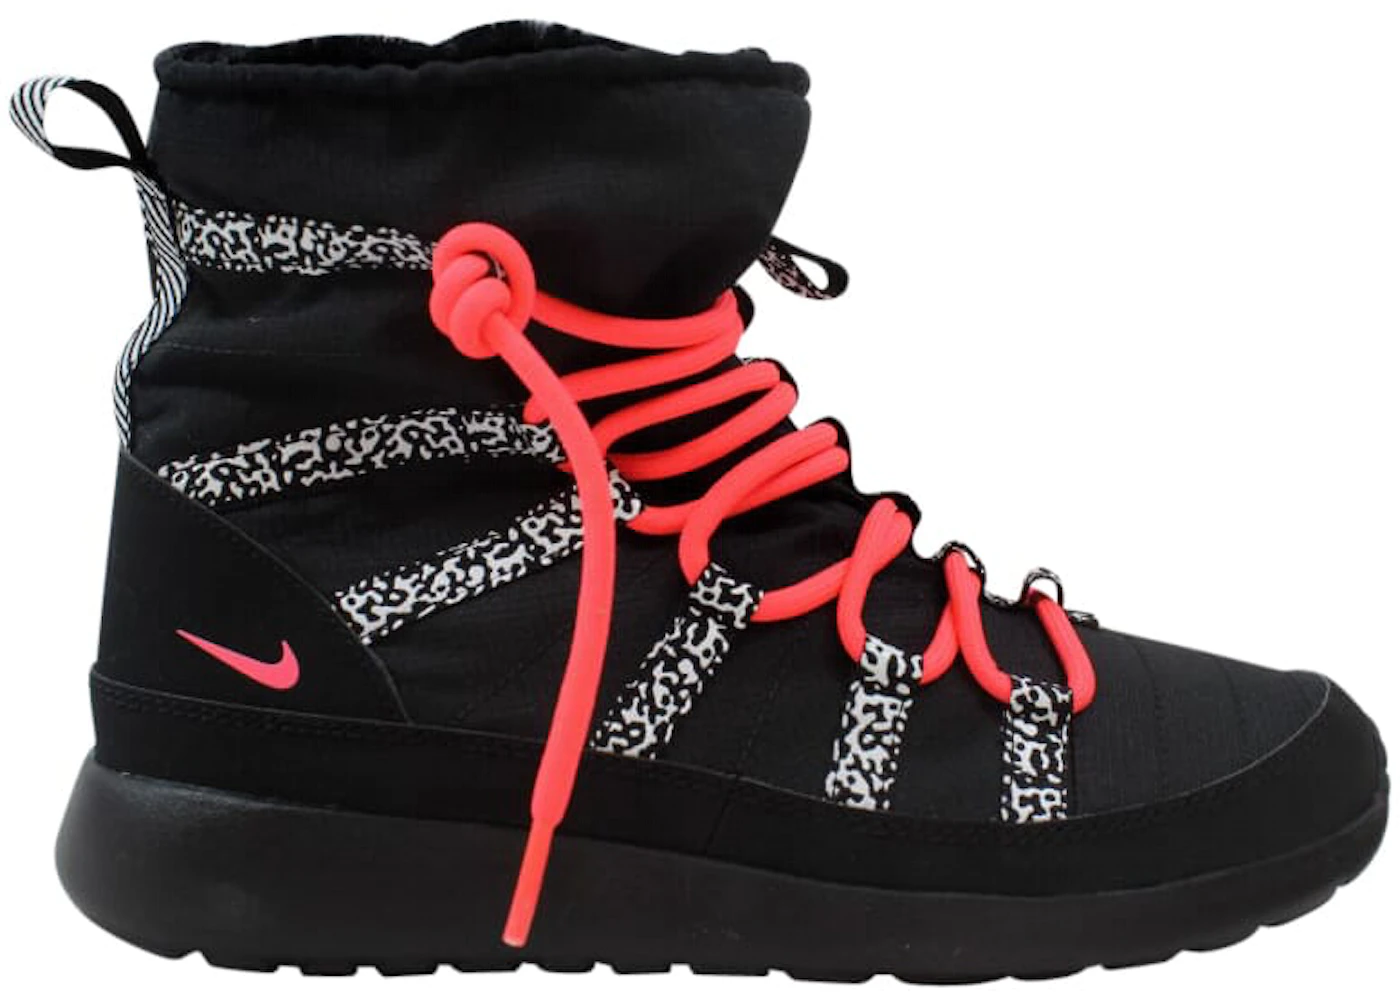 adherirse grueso perro Nike Rosherun Hi Sneakerboot Black (GS) - 654492-002 - US